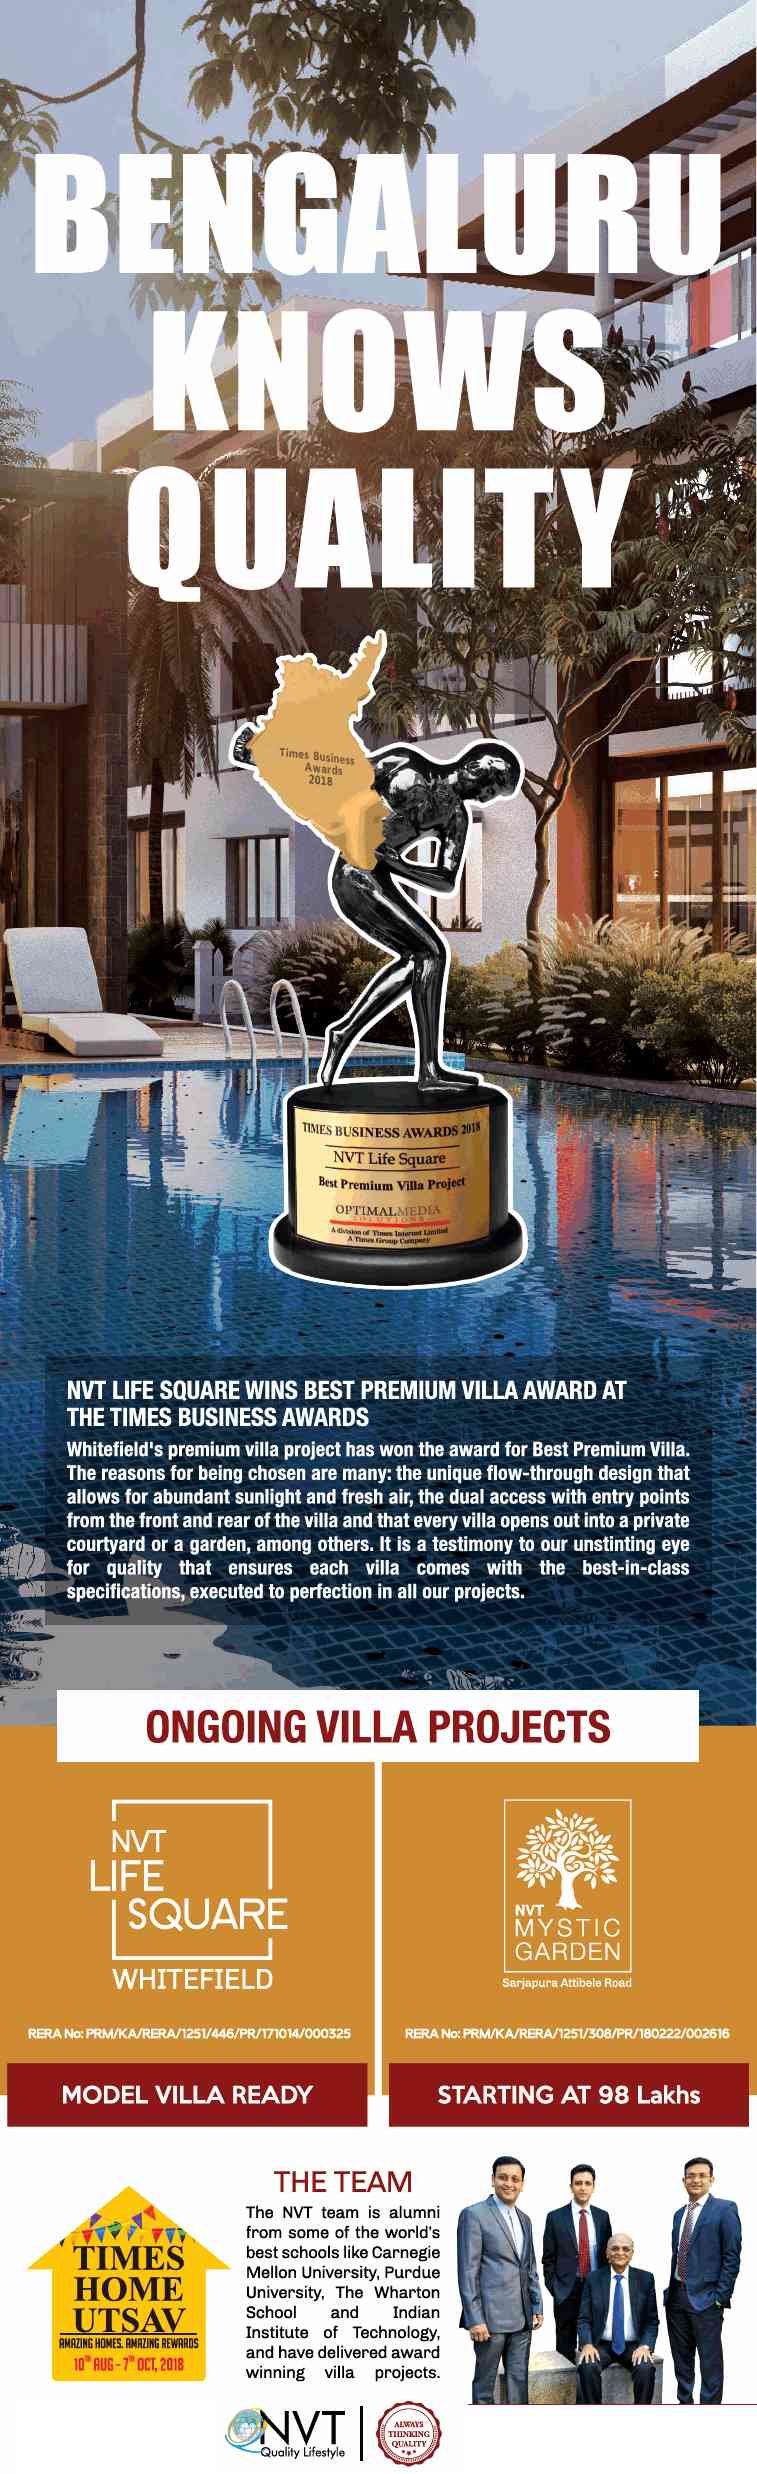 NVT Life Square awarded Best Premium Villa Project 2018 Update